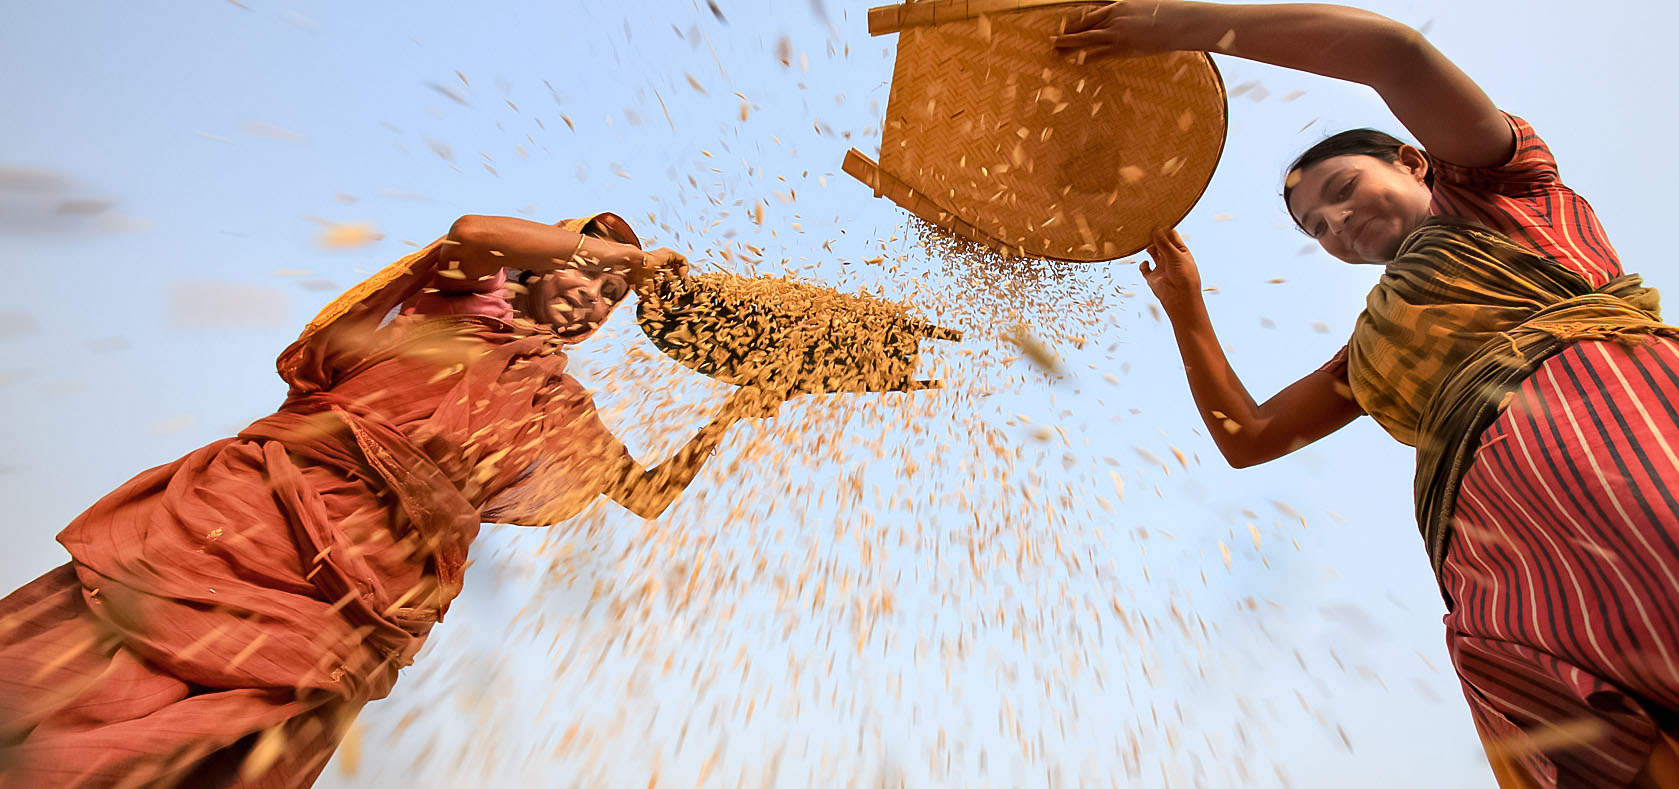 Rice processing in Bangladesh. Photo: UN Women/M. Yousuf Tushar